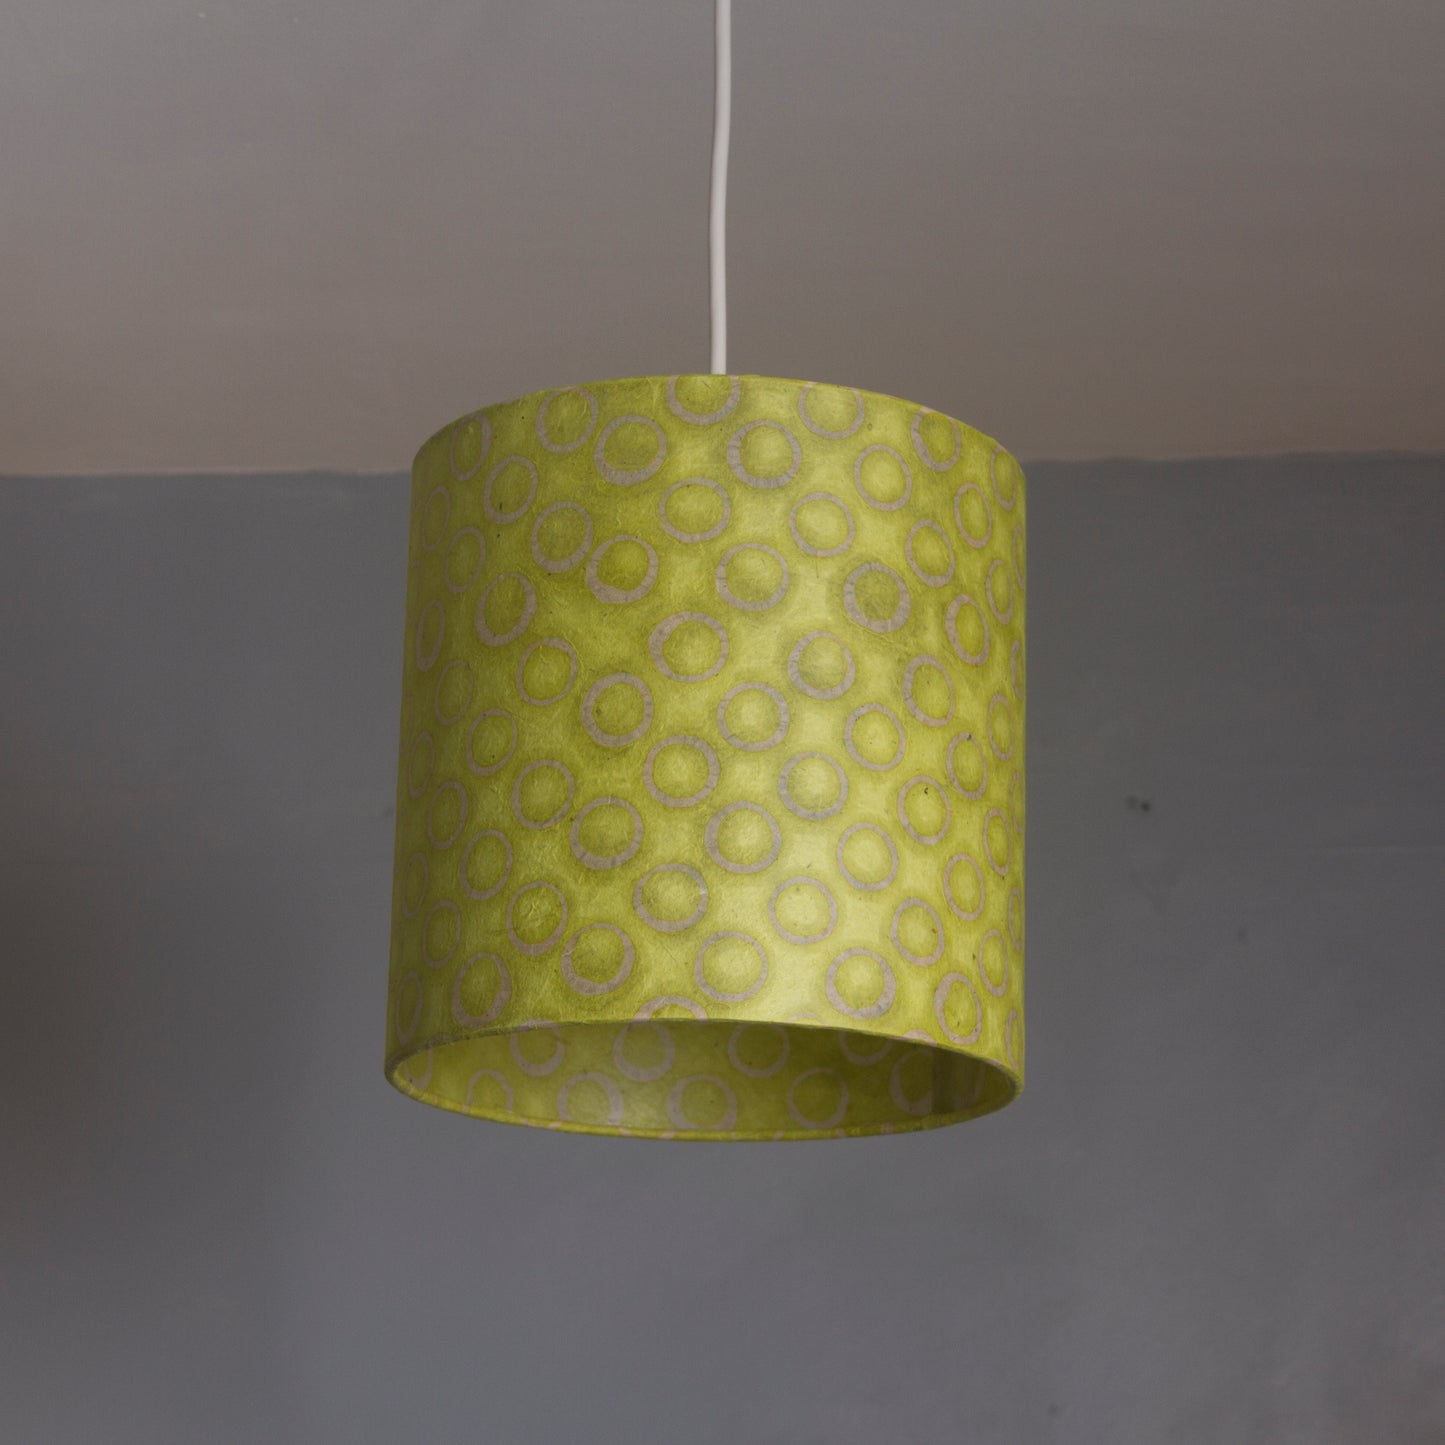 3 Tier Lamp Shade - P02 - Batik Lime Circles, 50cm x 20cm, 40cm x 17.5cm & 30cm x 15cm